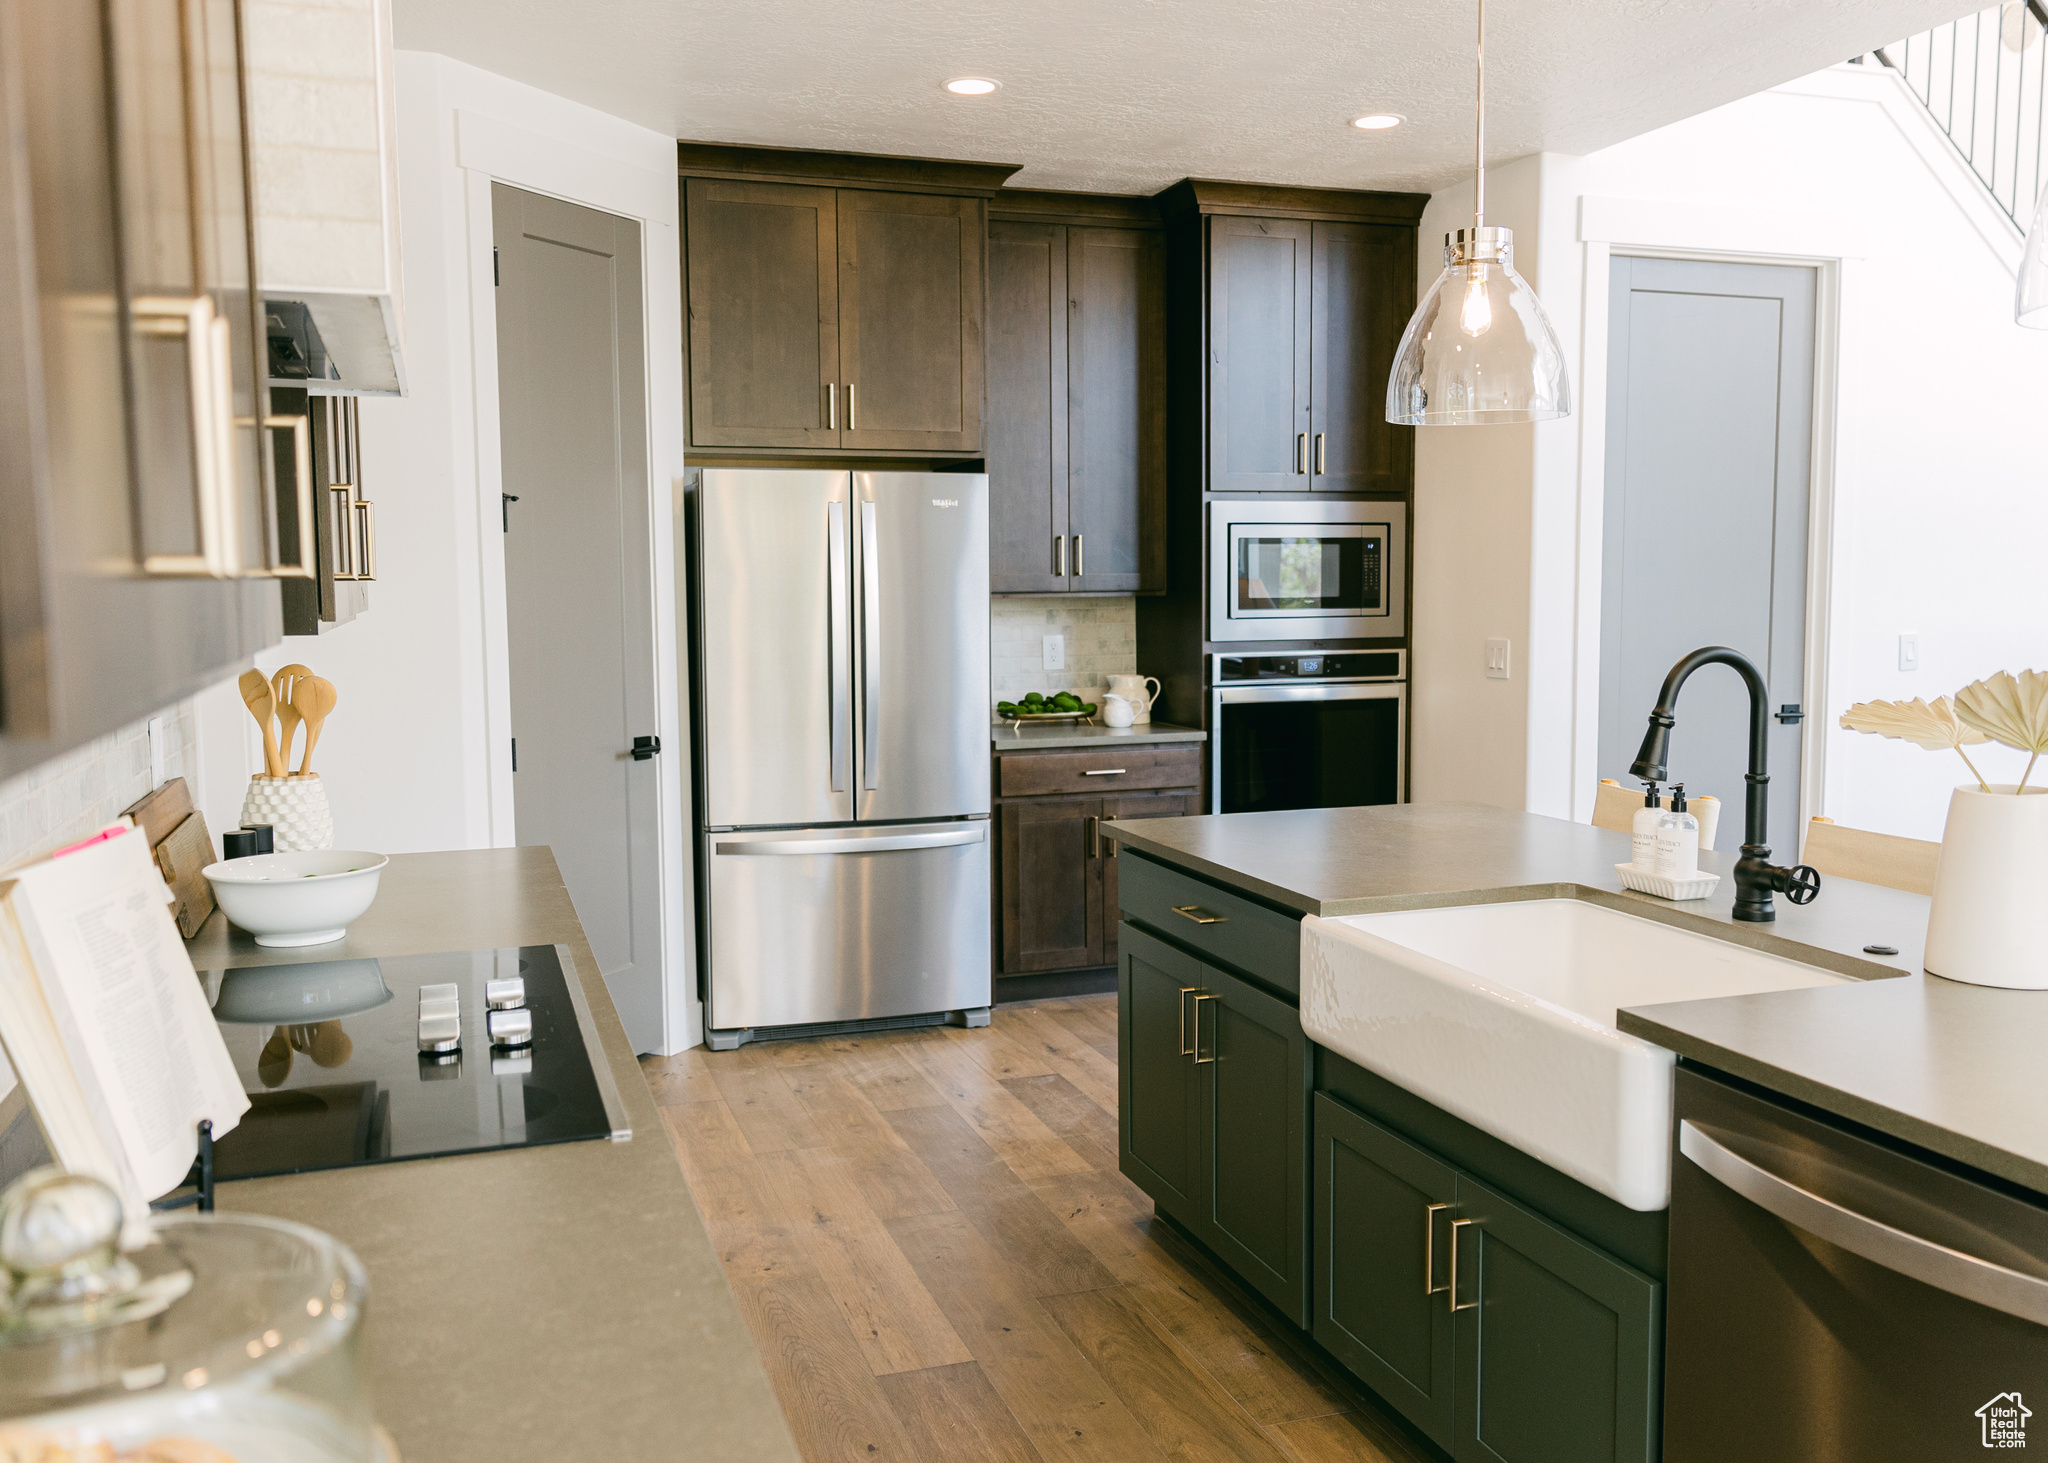 Kitchen with light hardwood / wood-style floors, tasteful backsplash, pendant lighting, sink, and appliances with stainless steel finishes